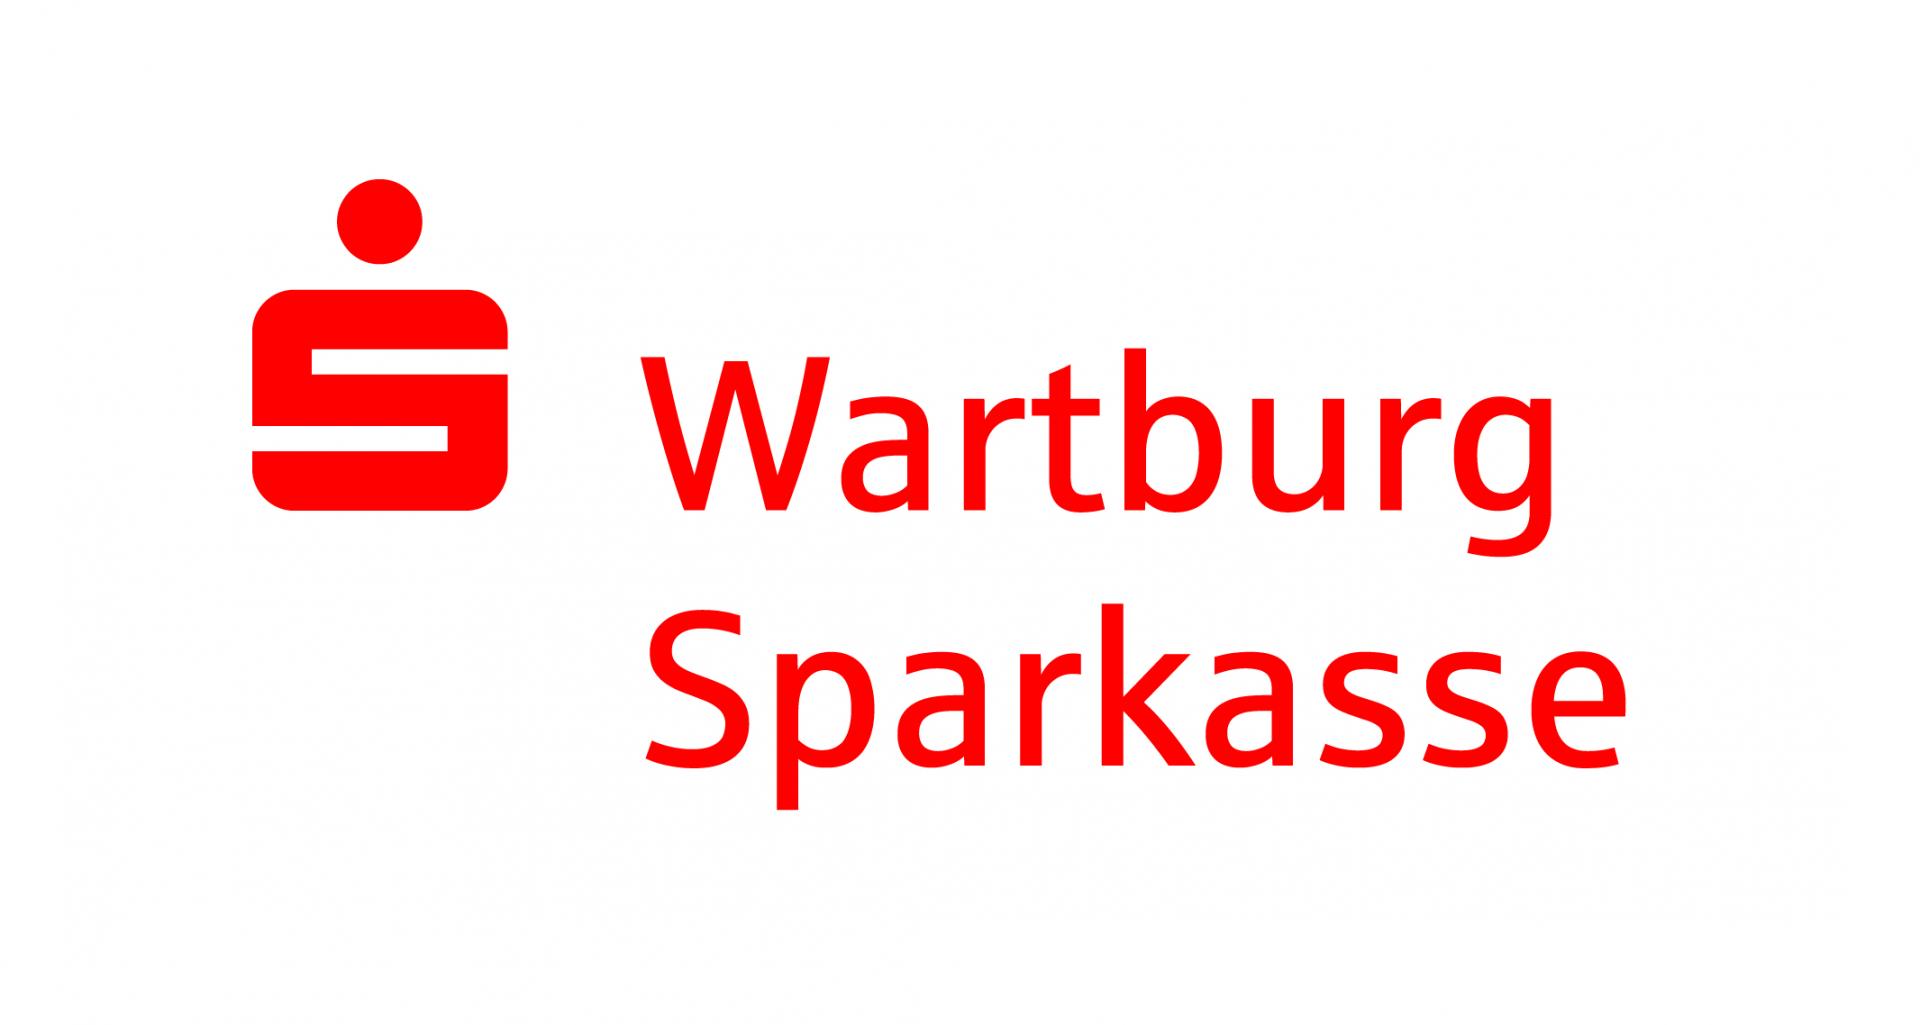 Wartburgsparkasse